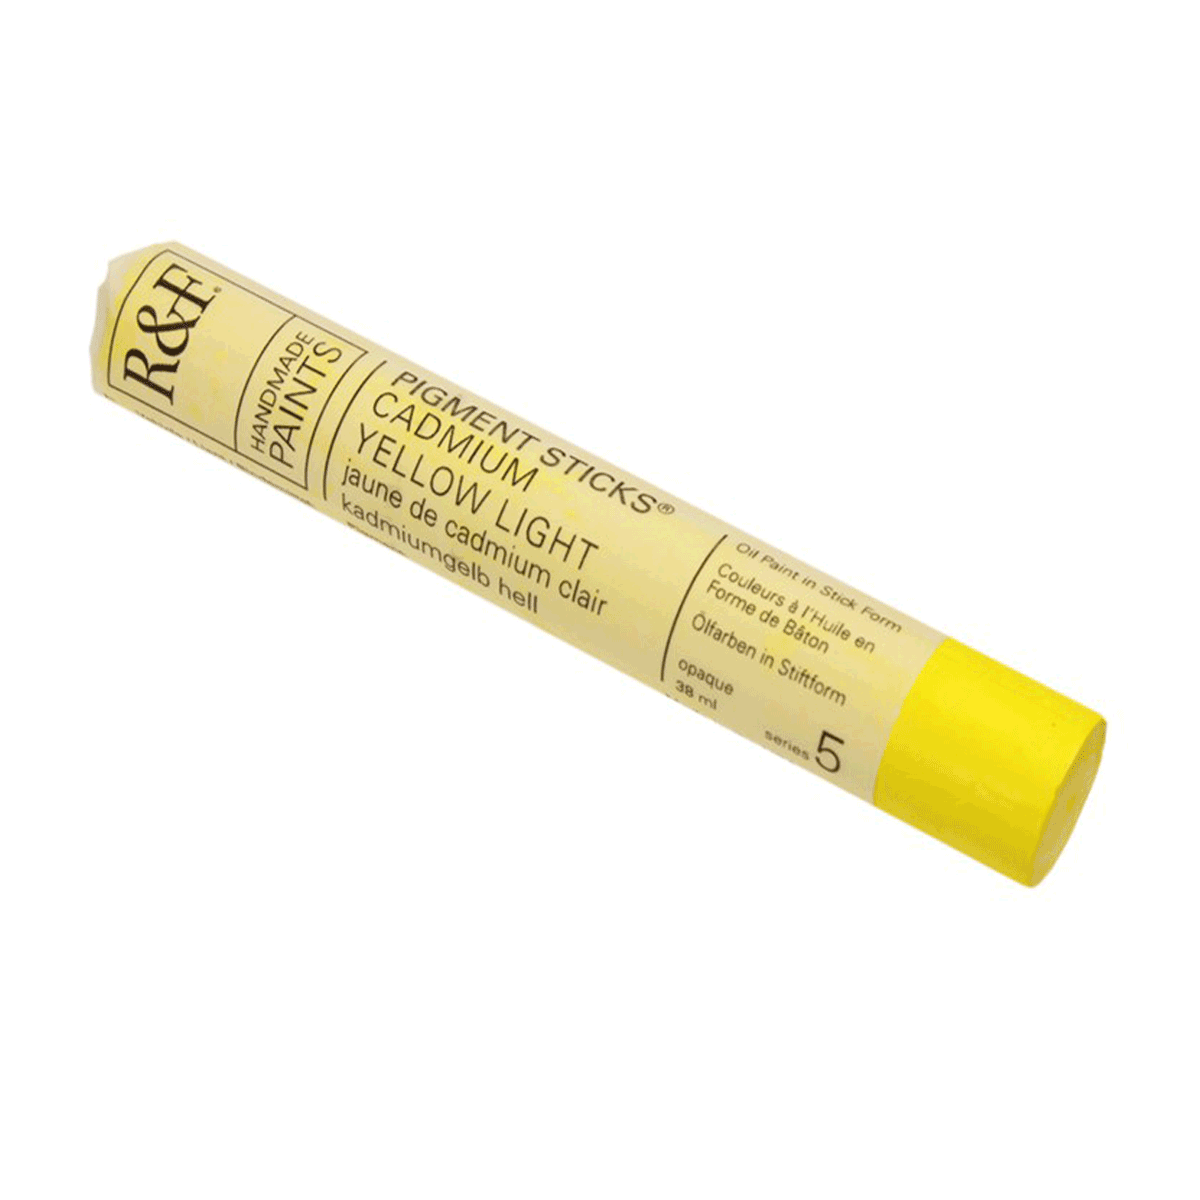 R&F Oil Pigment Stick, Cadmium Yellow Light 38ml